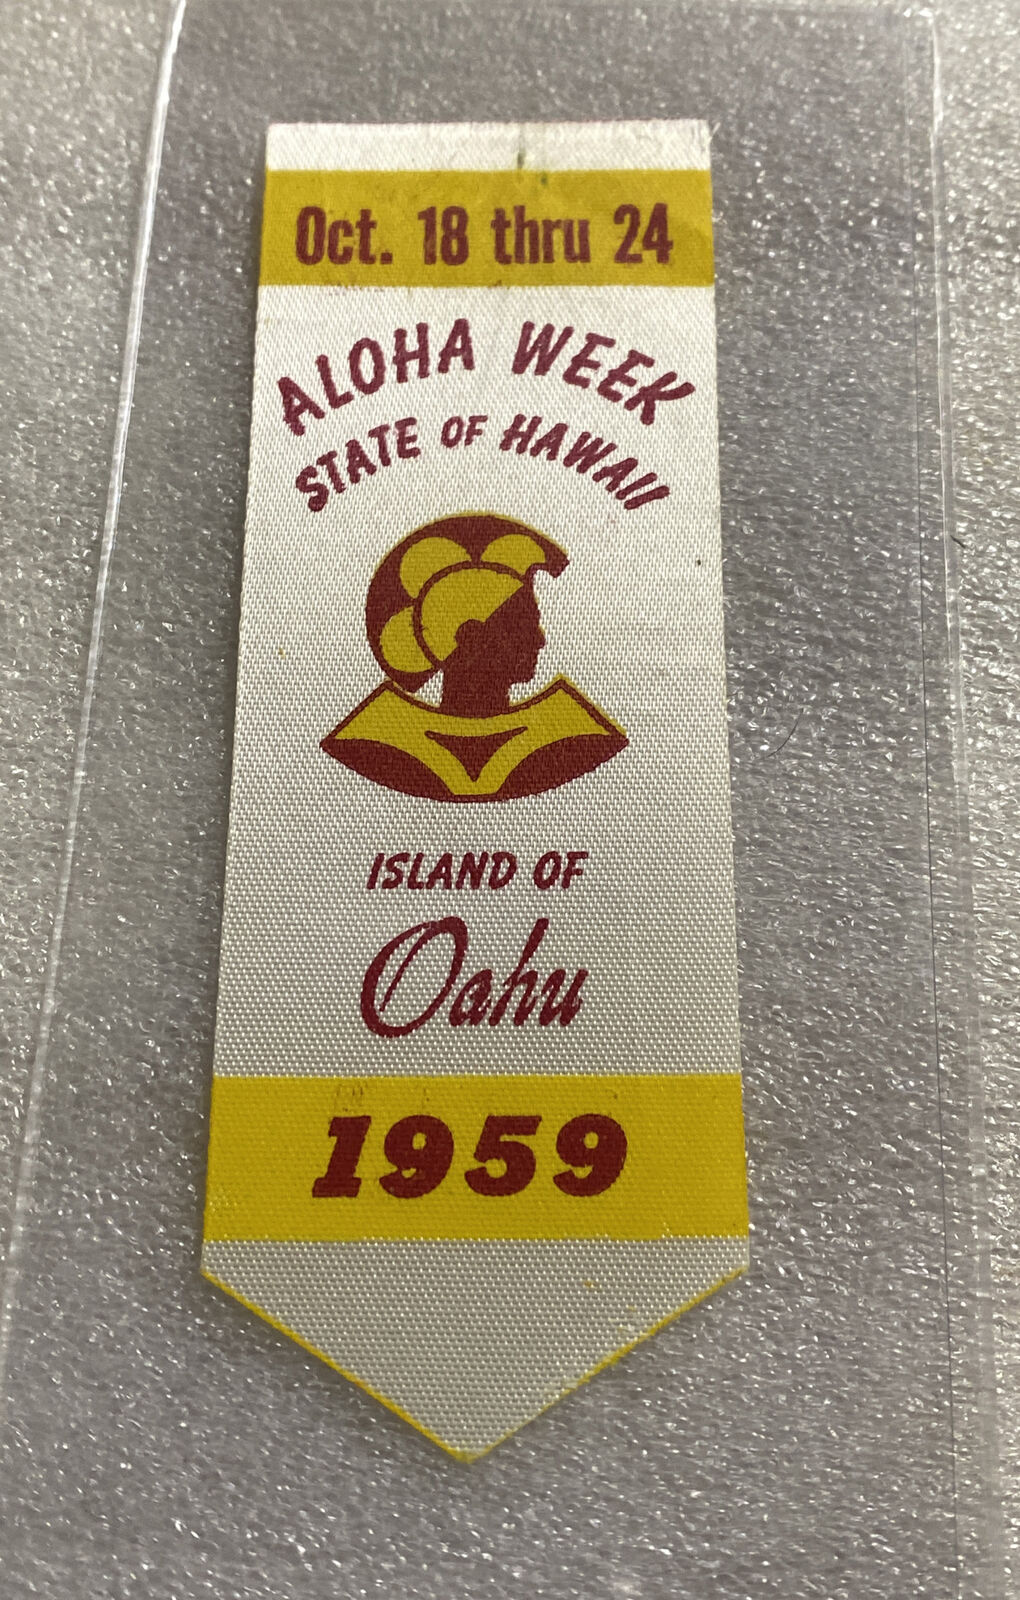 VINTAGE OAHU HAWAII ISLAND FESTIVAL ALOHA WEEK RIBBON BADGE 1959